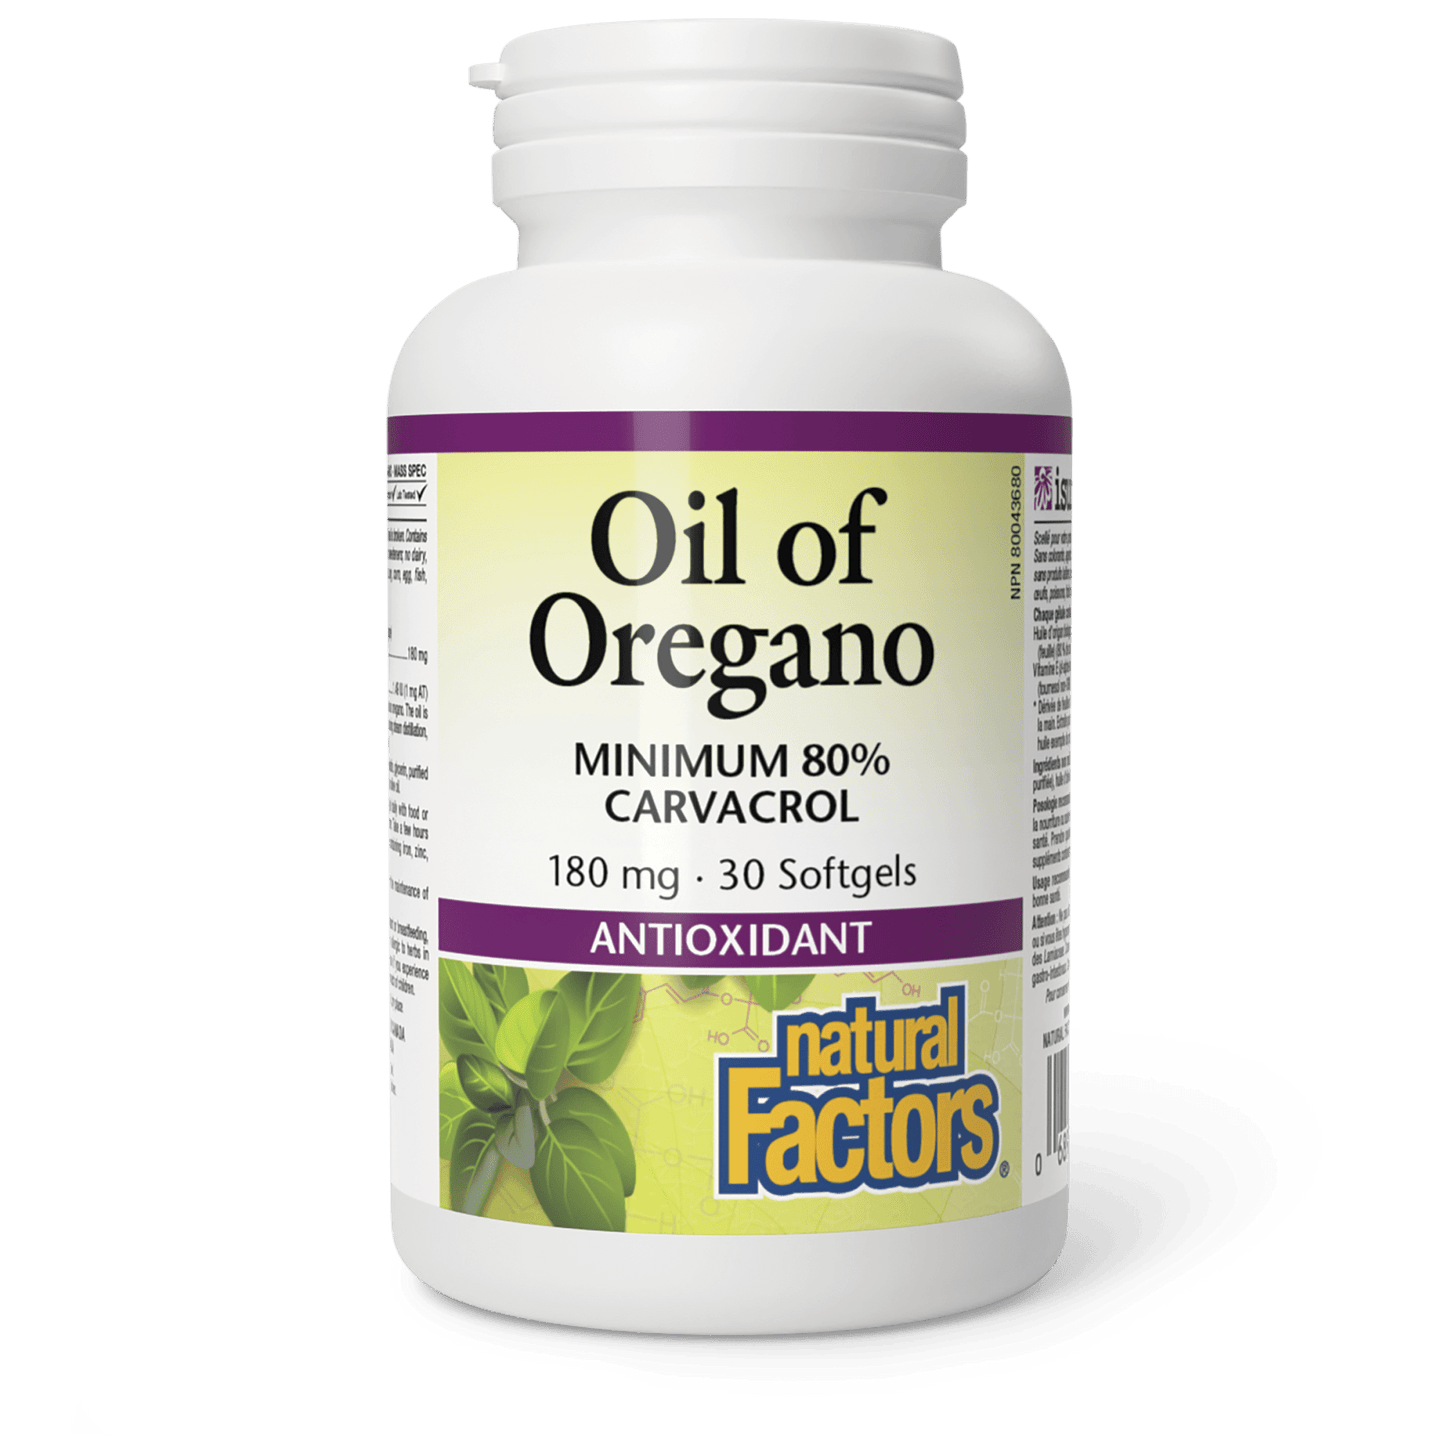 Oil of Oregano 180 mg, Natural Factors|v|image|4573